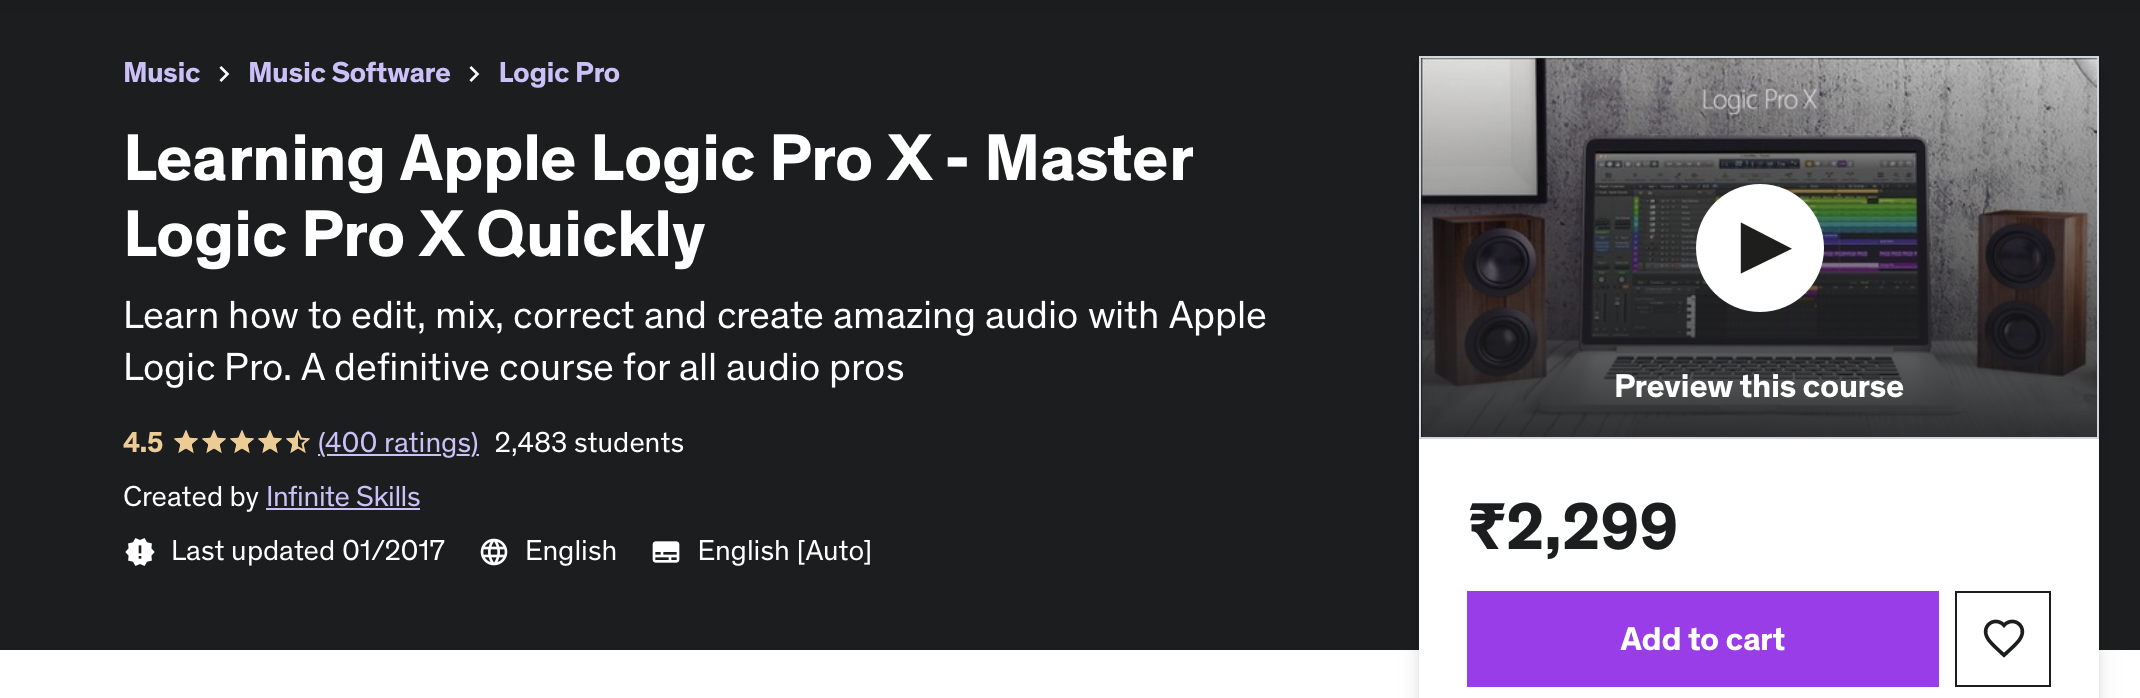 Learning Apple Logic Pro X - Master Logic Pro X Quickly